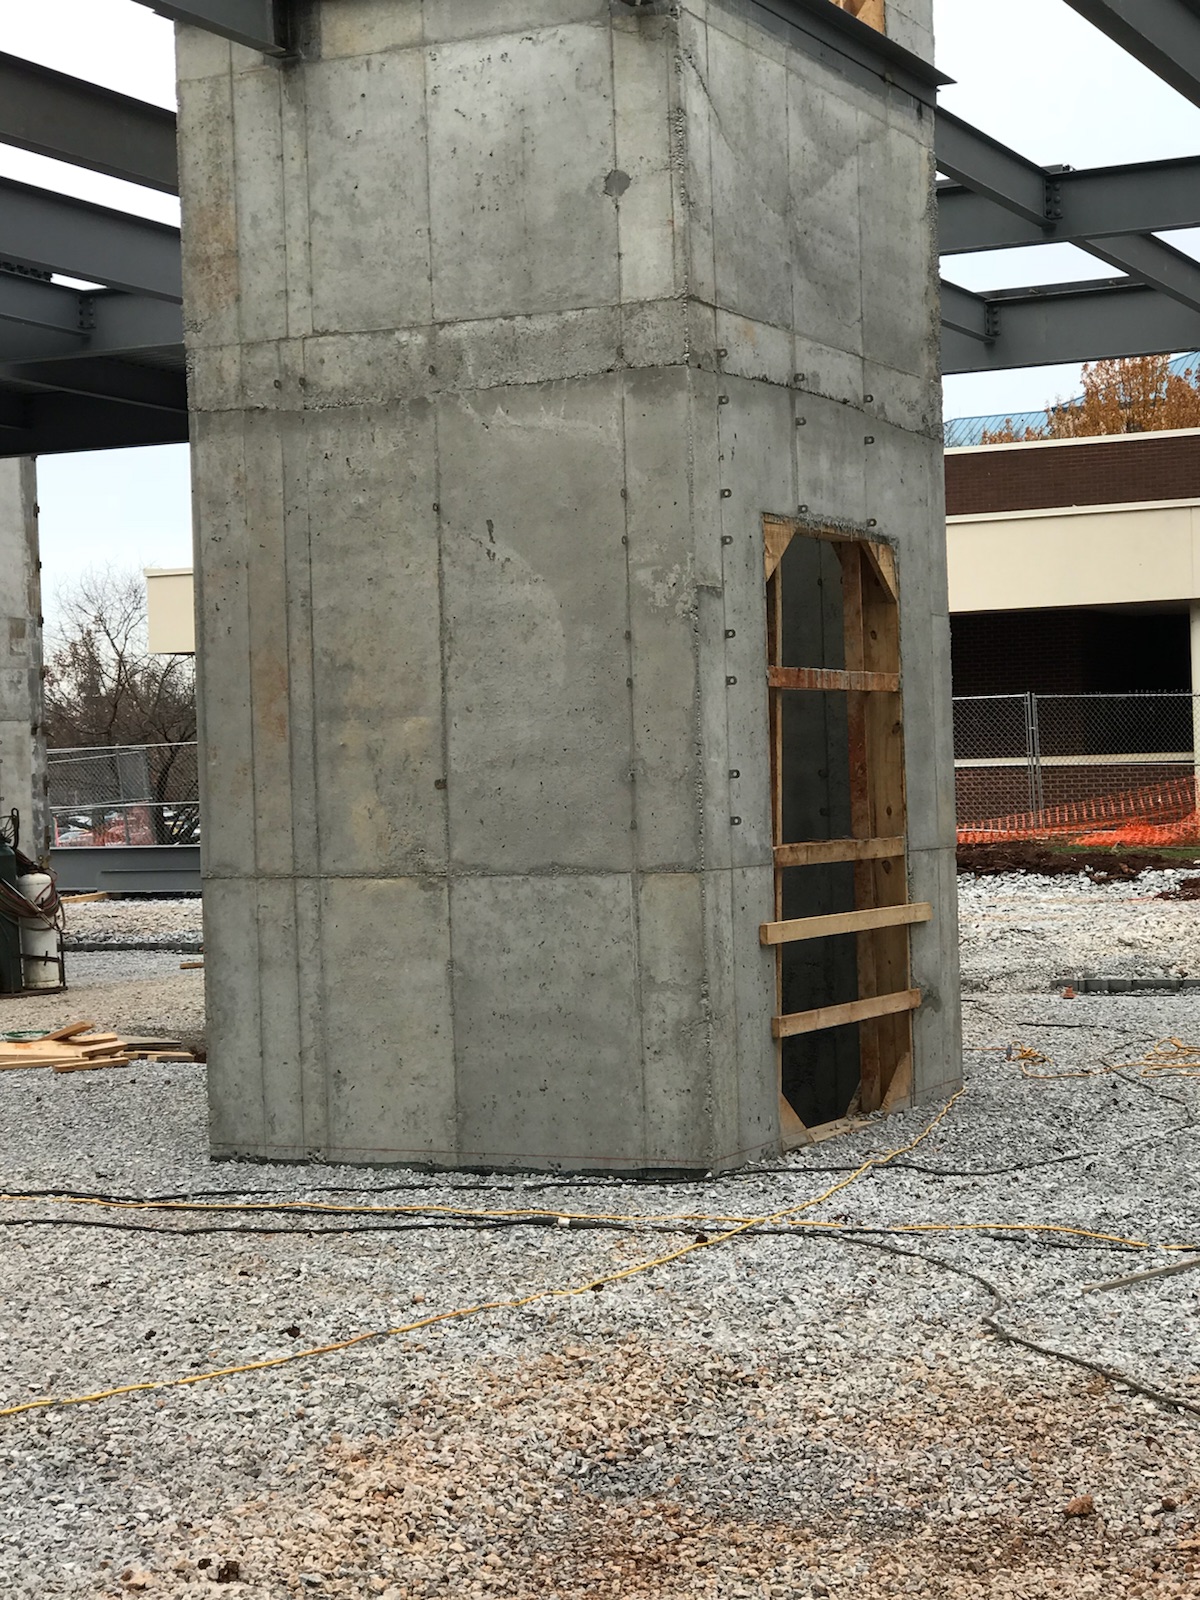 Construction of new elevator shaft 50 feet high at UAH in Huntsville, Alabama